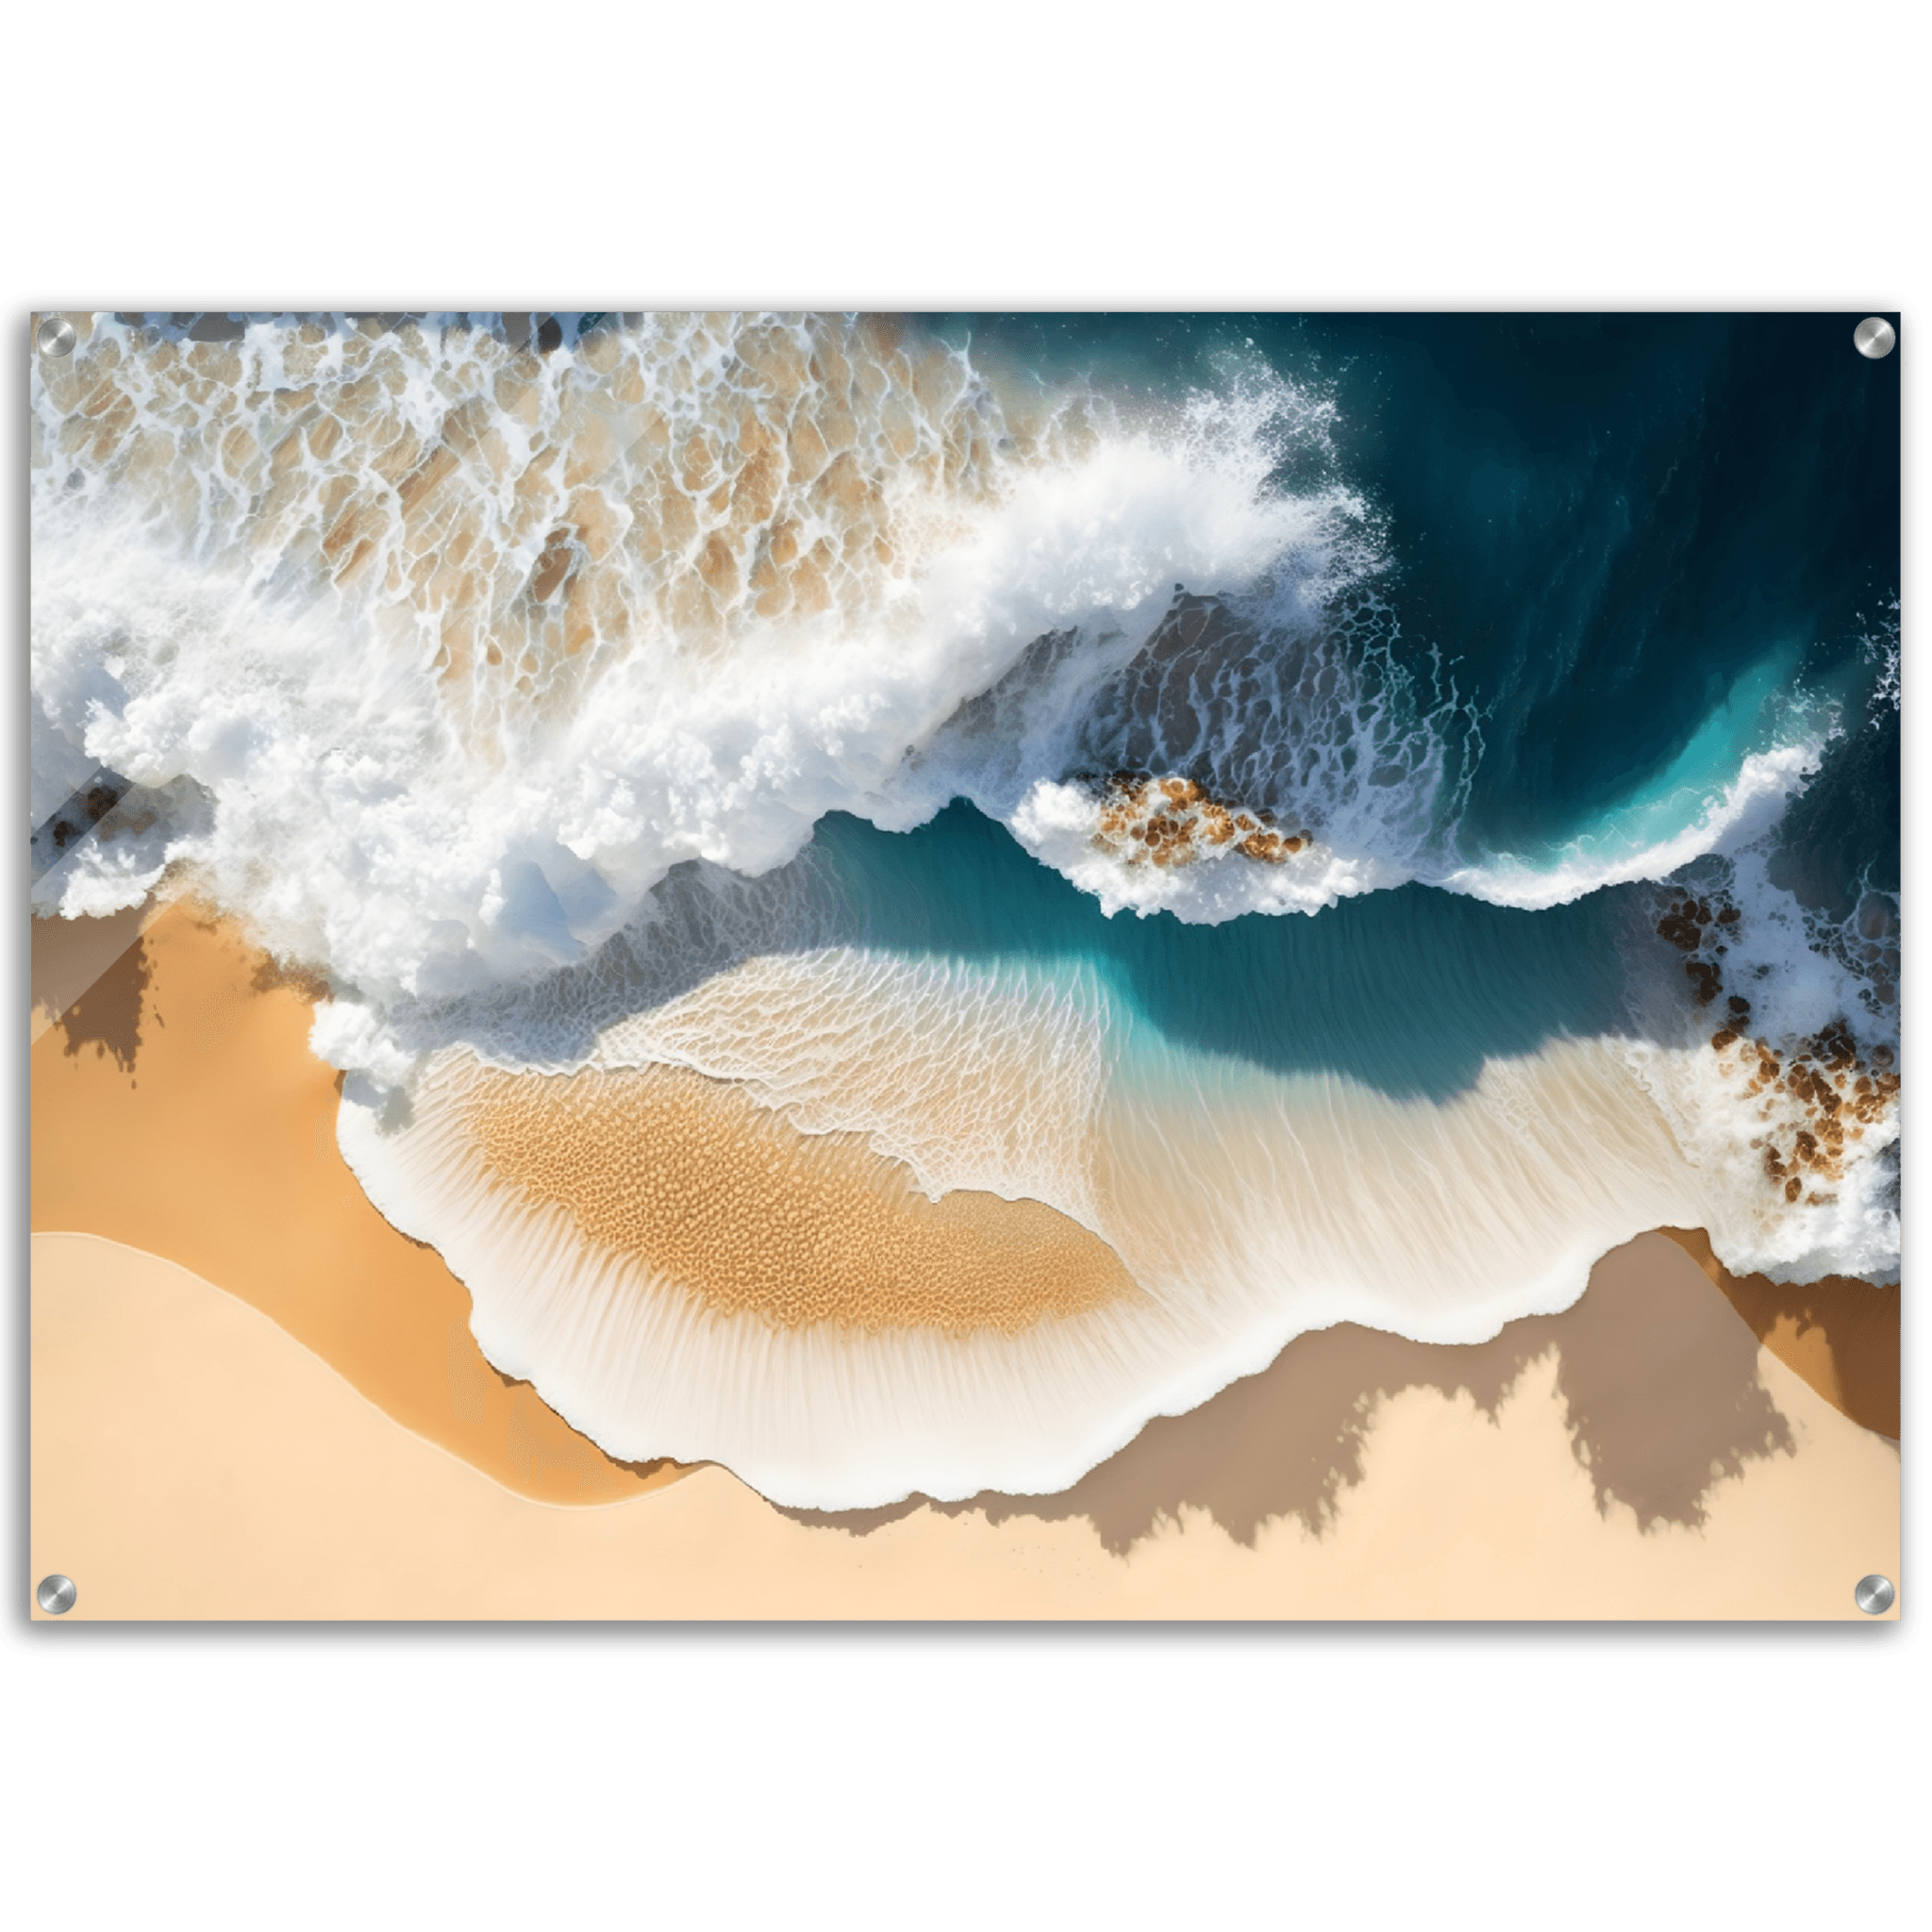 Beauty of the Sea: Waves Acrylic Glass Wall Art - Wallfix